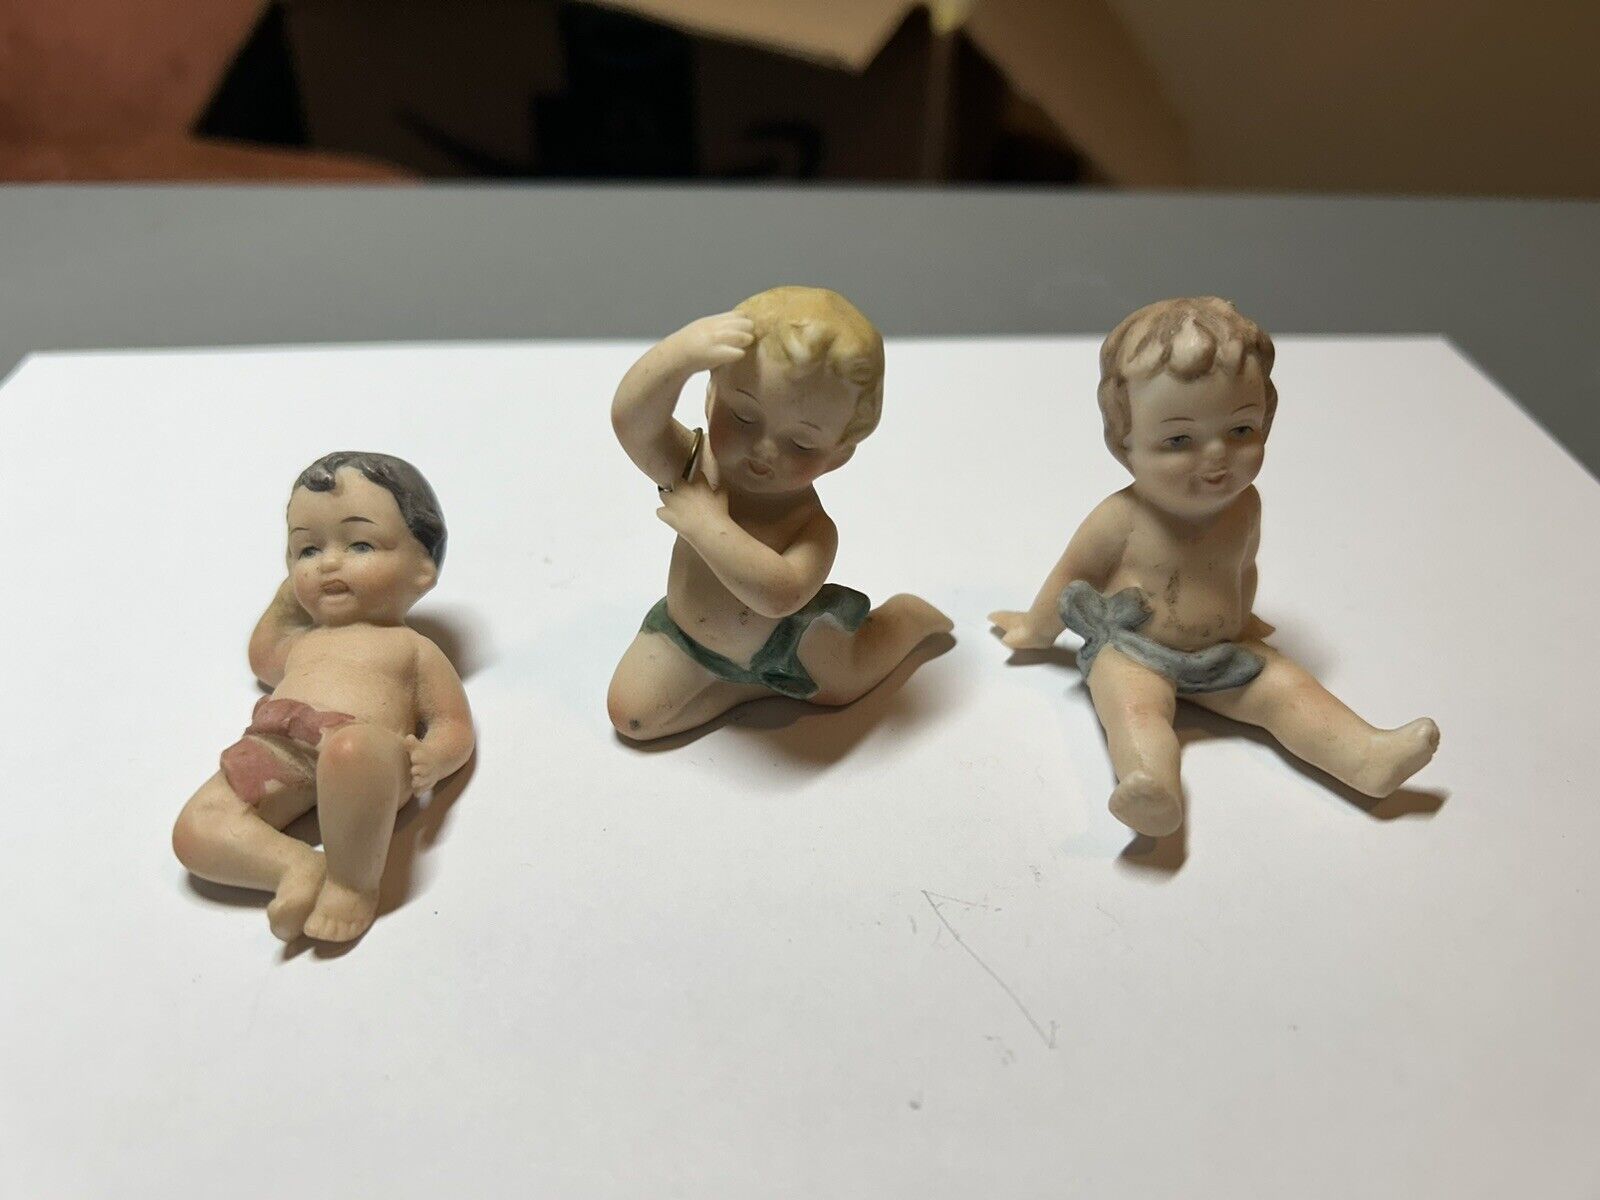 3 Vintage L&M Porcelain Bisque Baby Dolls - 2 Inches